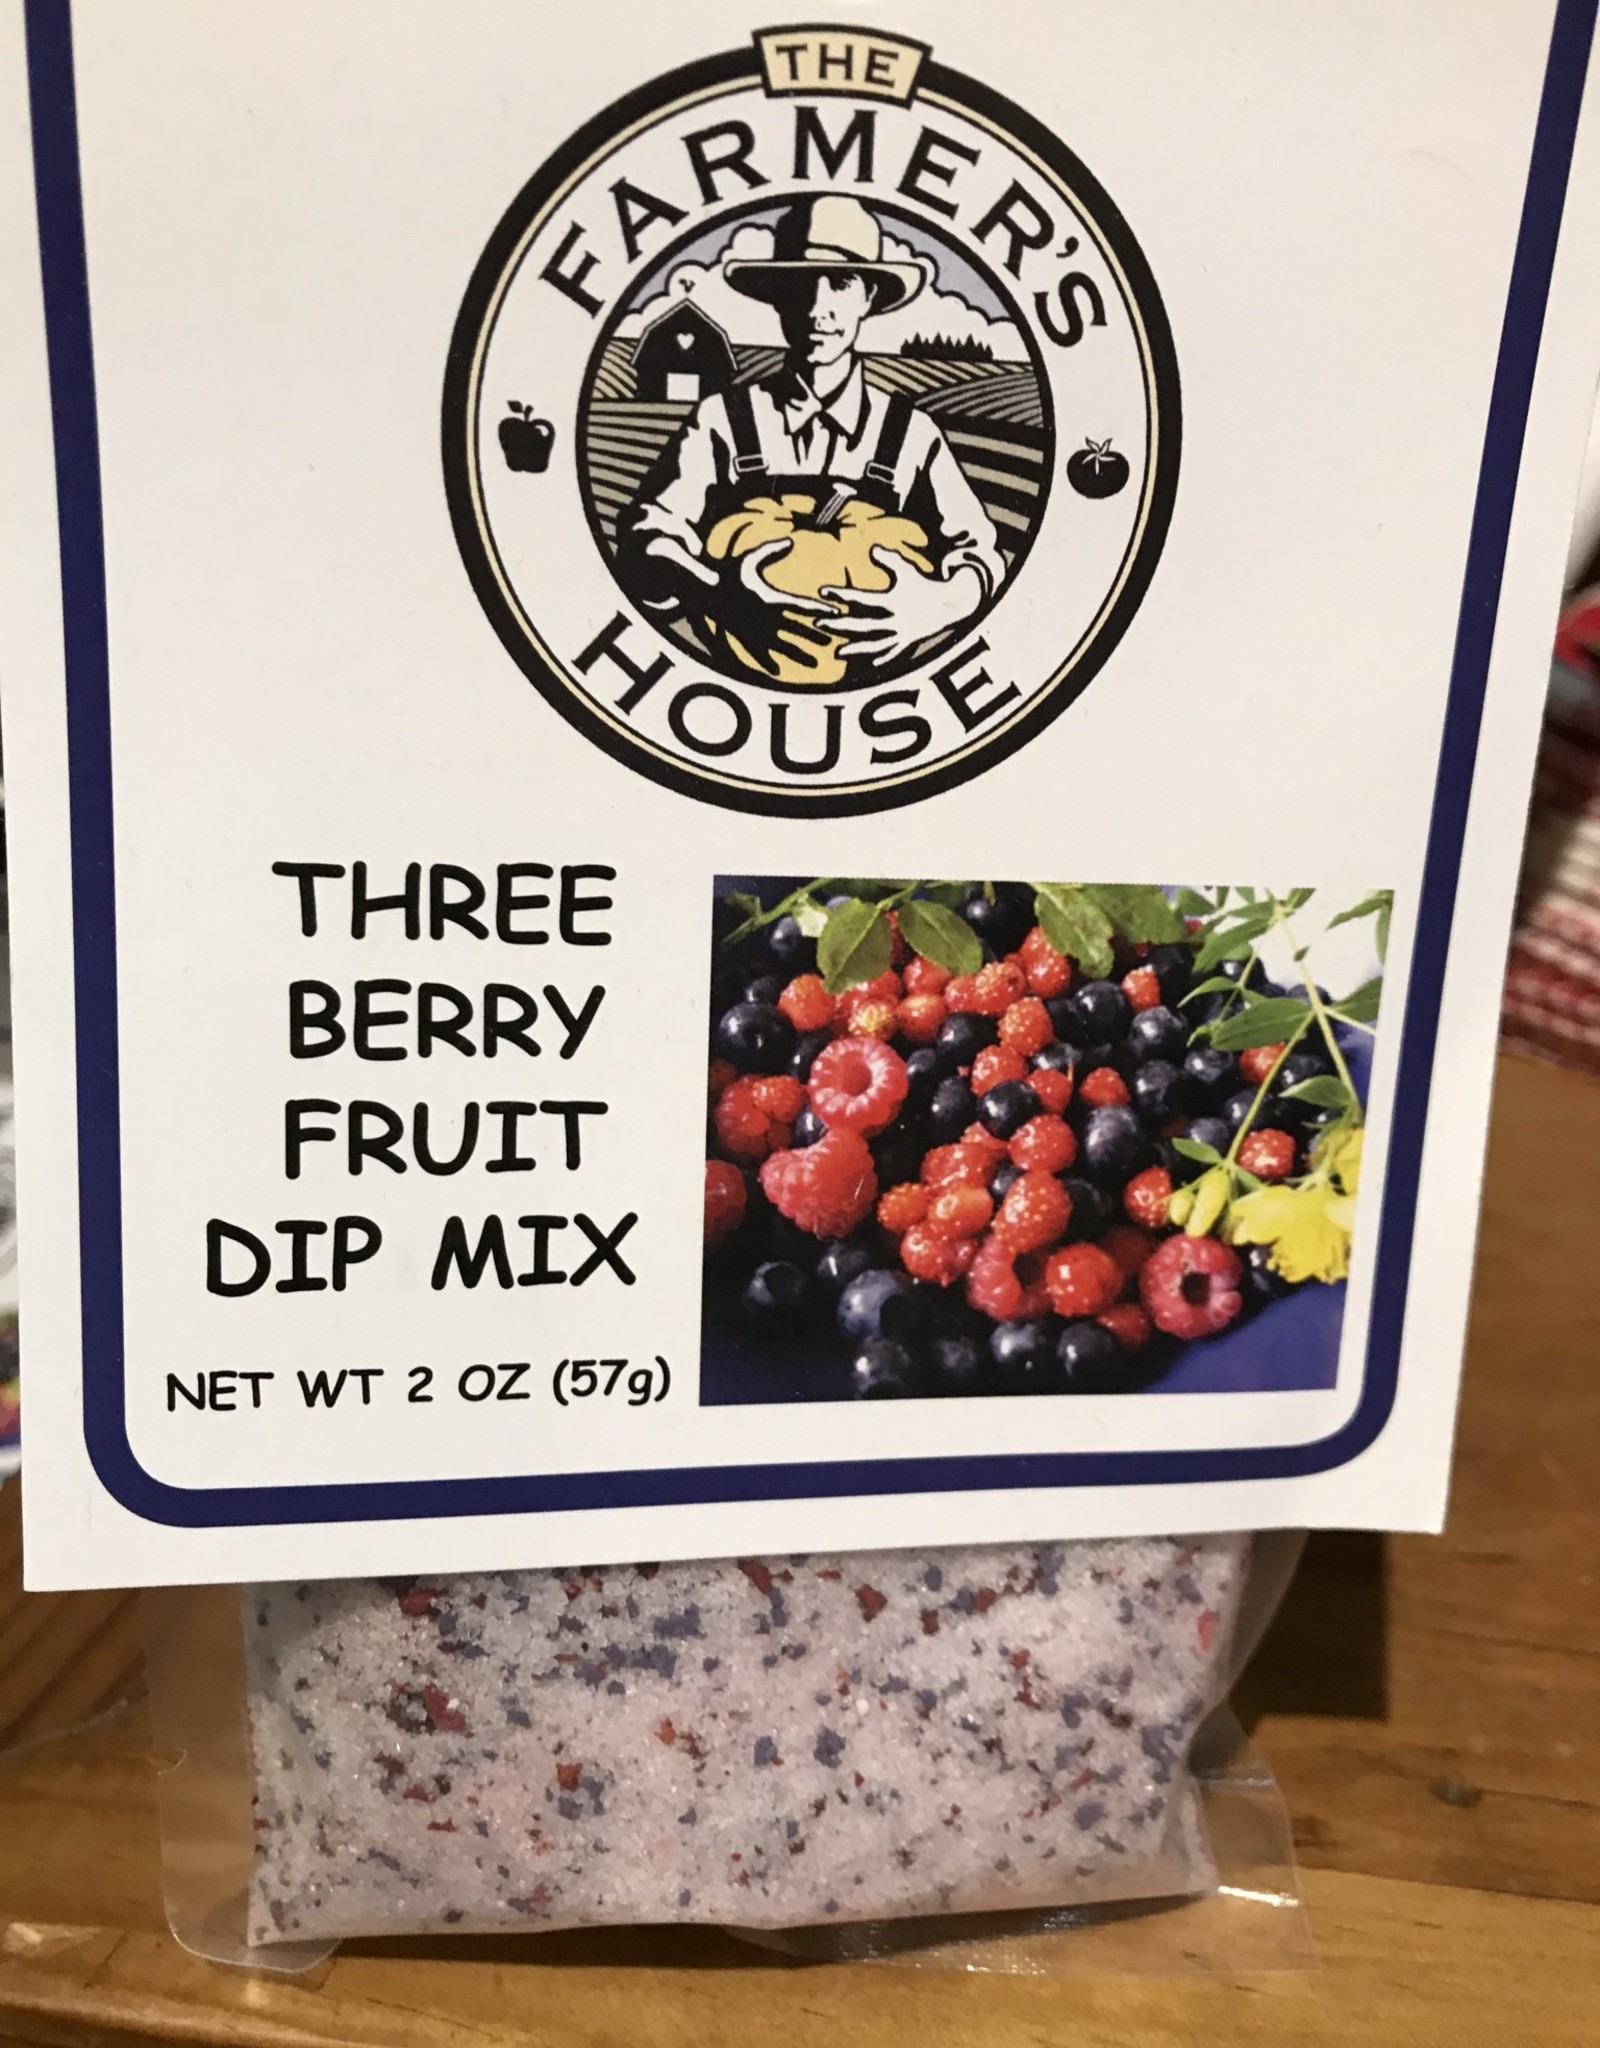 TFH Dip Mix: Three Berry Fruit